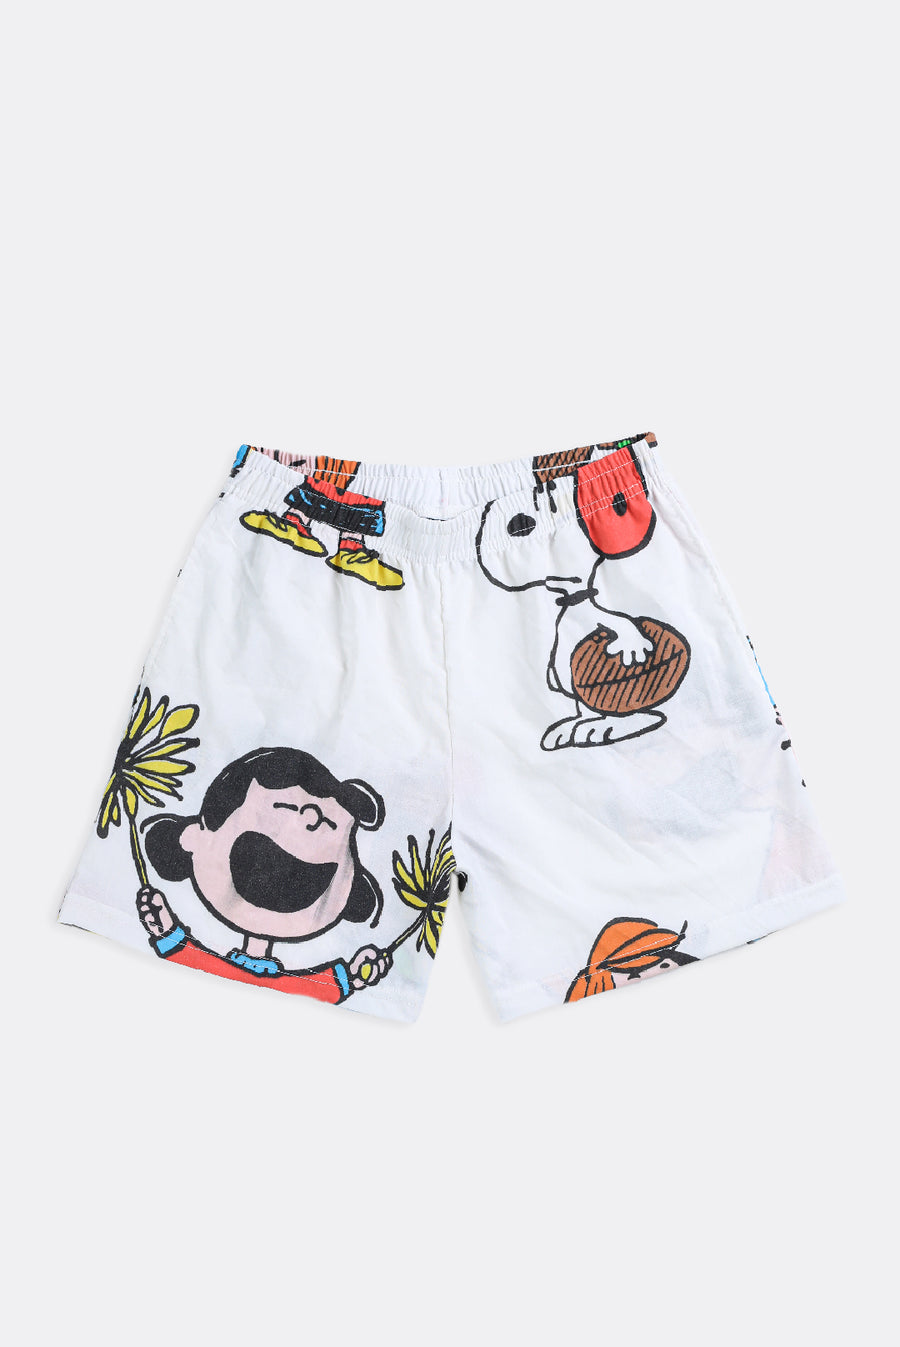 Unisex Rework Charlie Brown Boxer Shorts - XS, S